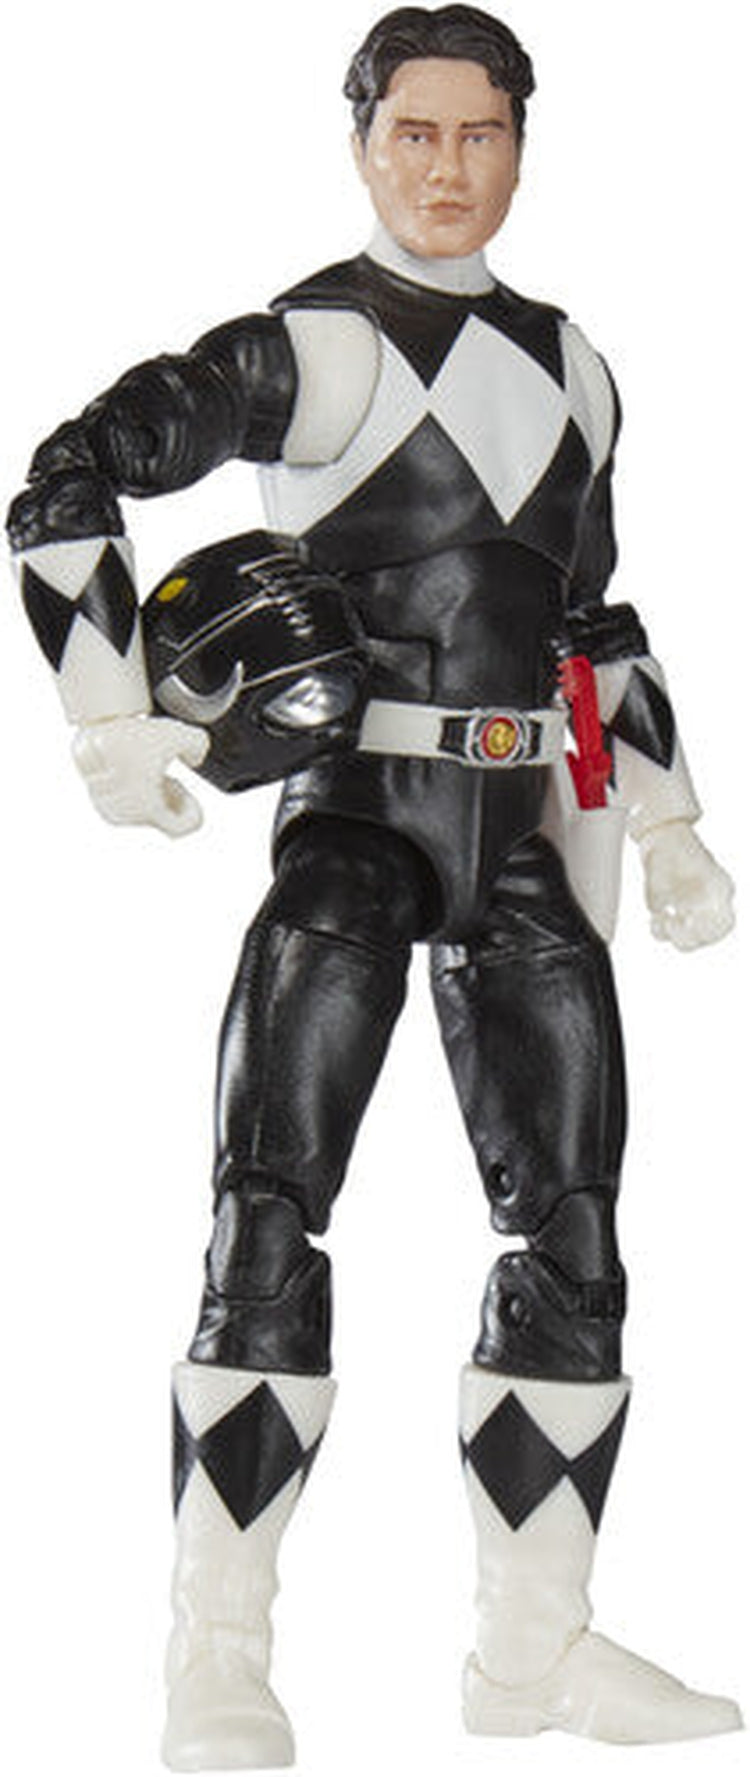 Hasbro Collectibles - Power Rangers Lightning Collection Mighty Morphin Power Rangers Black Ranger Figure